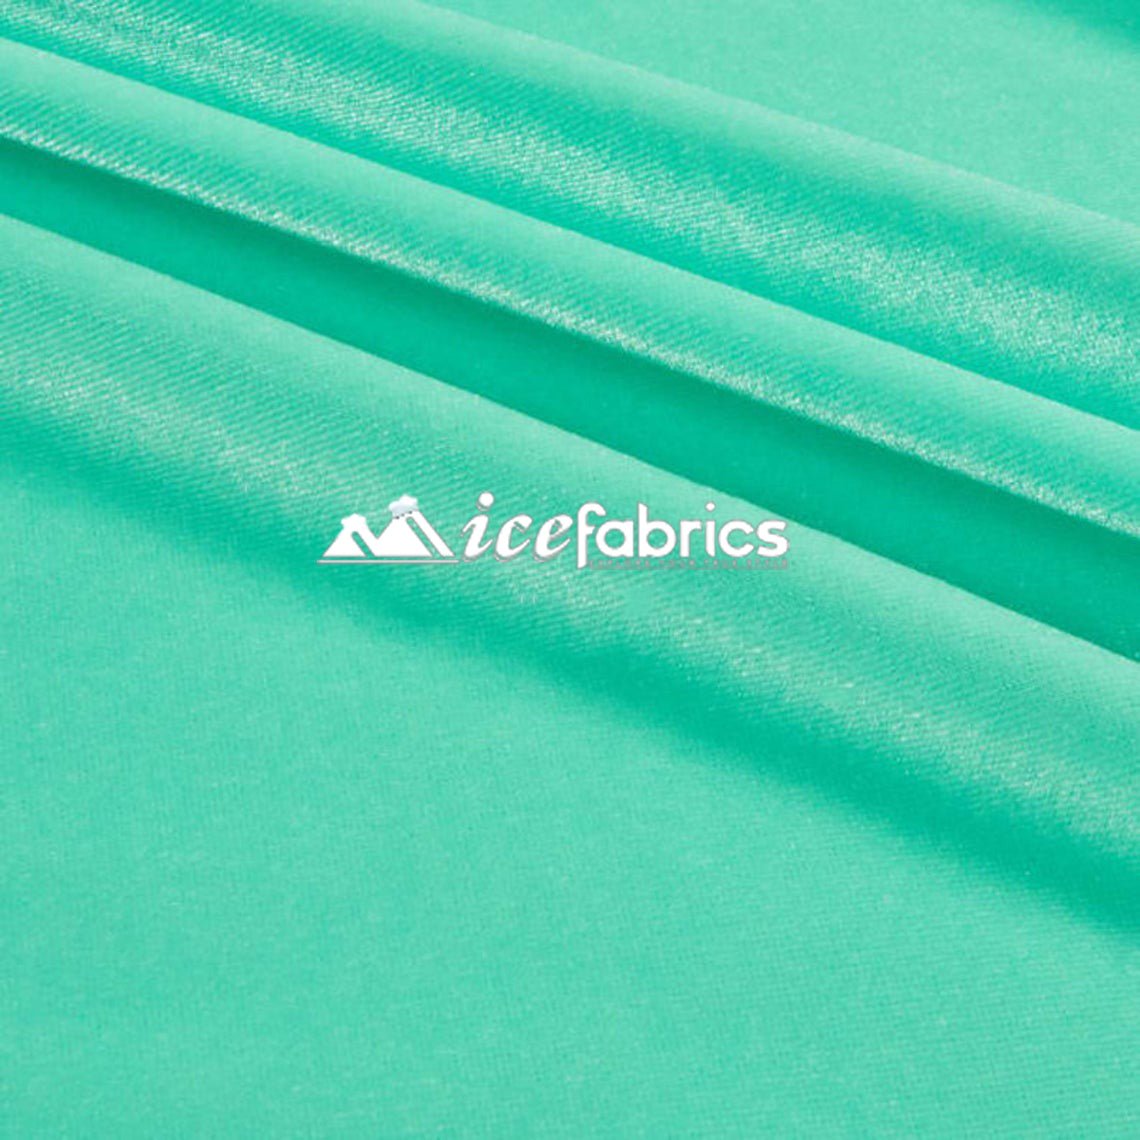 Mint Green Velvet Fabric | 4 Way Stretch SpandexVelvet FabricICE FABRICSICE FABRICSMint Green Velvet Fabric | 4 Way Stretch Spandex ICE FABRICS